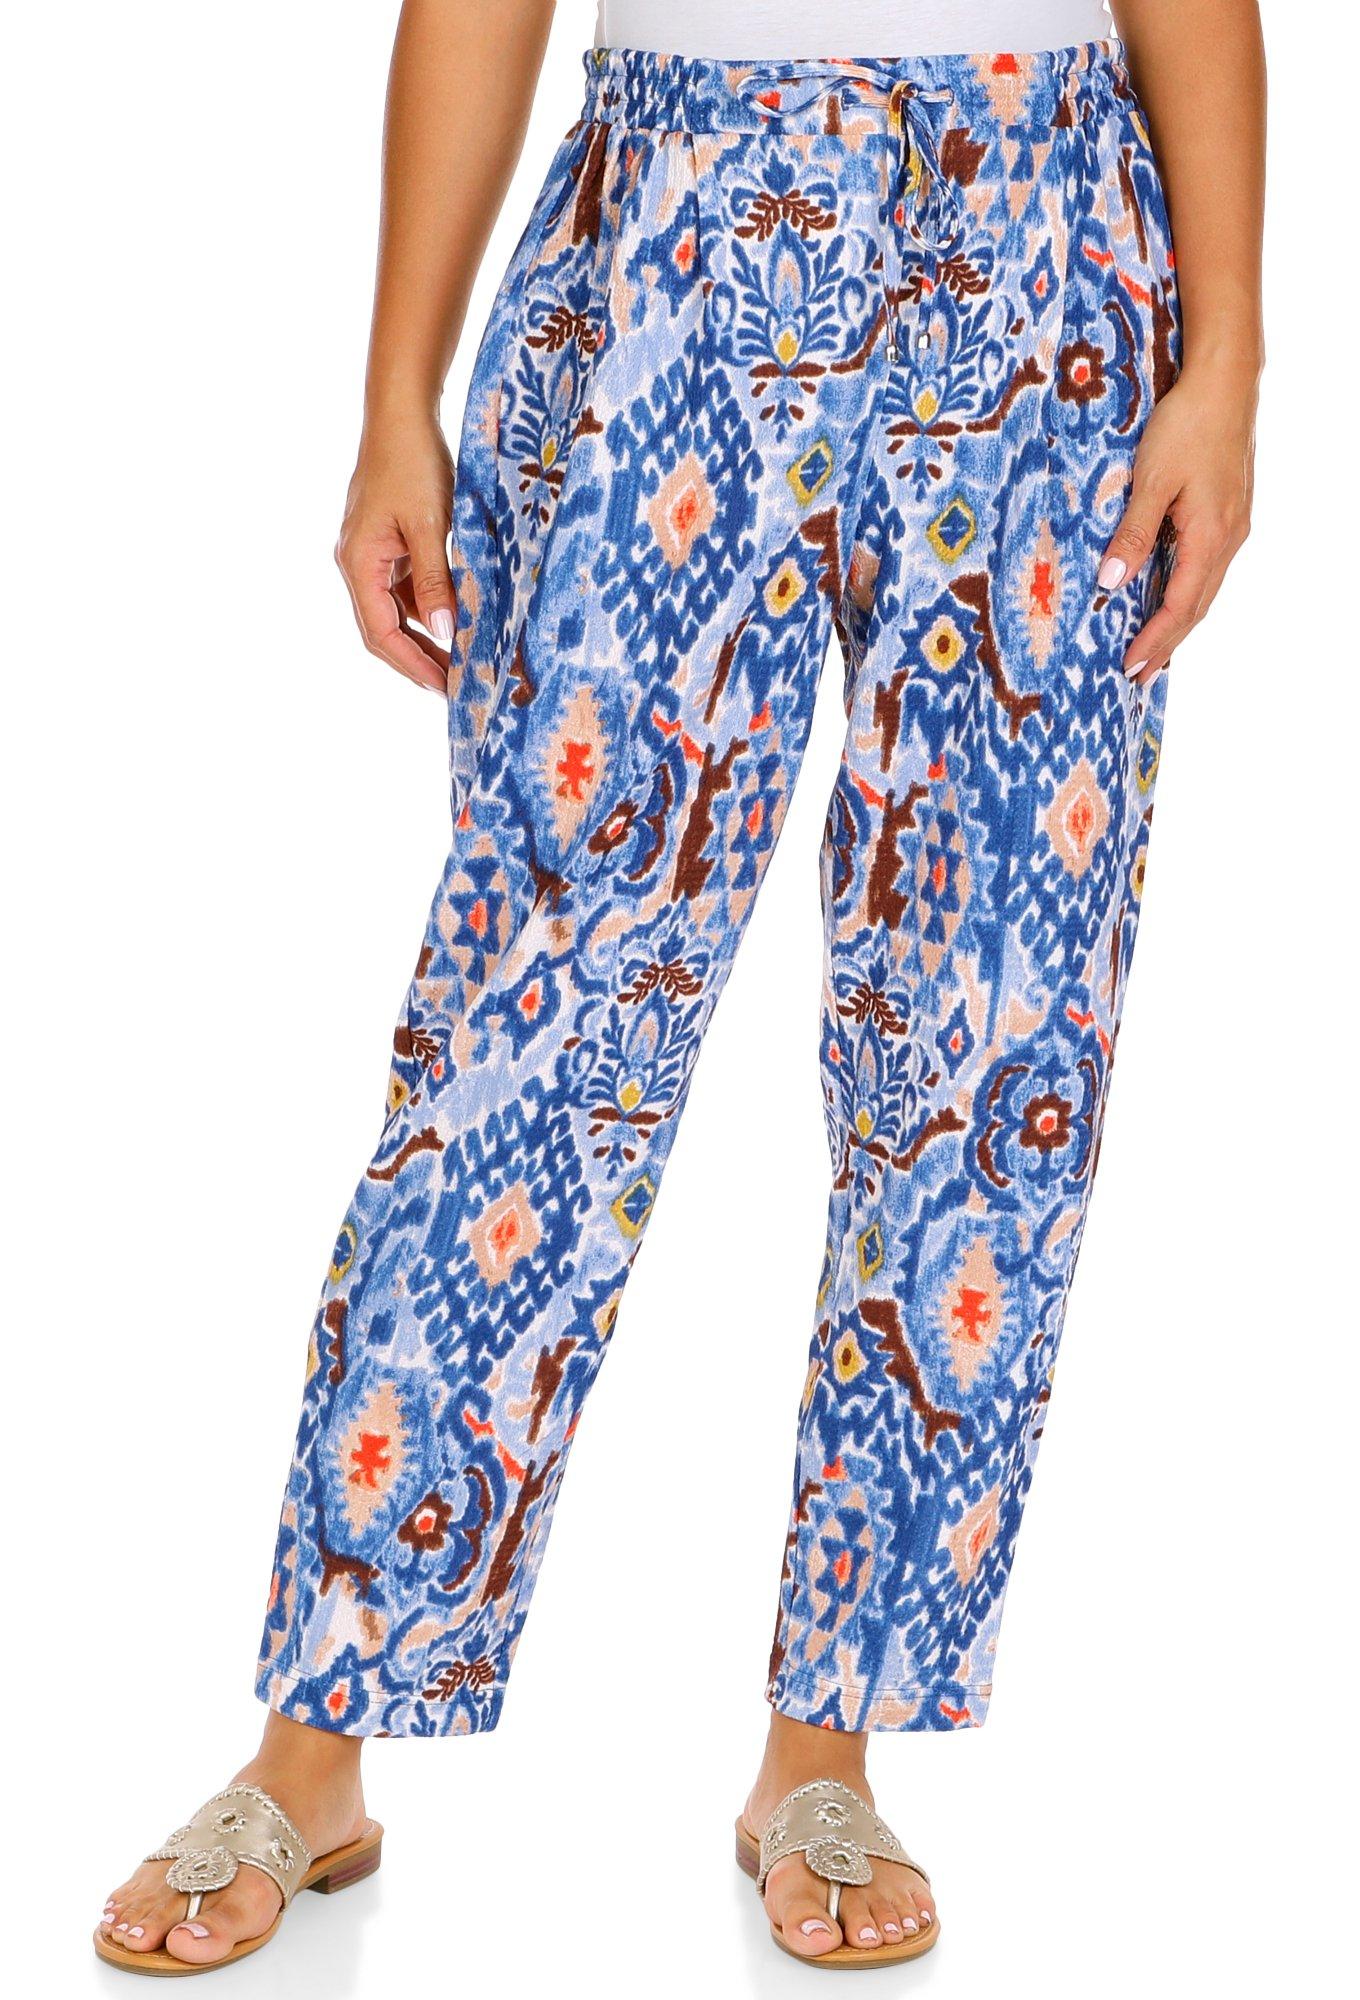 Women's Comfort Multi Print Pants